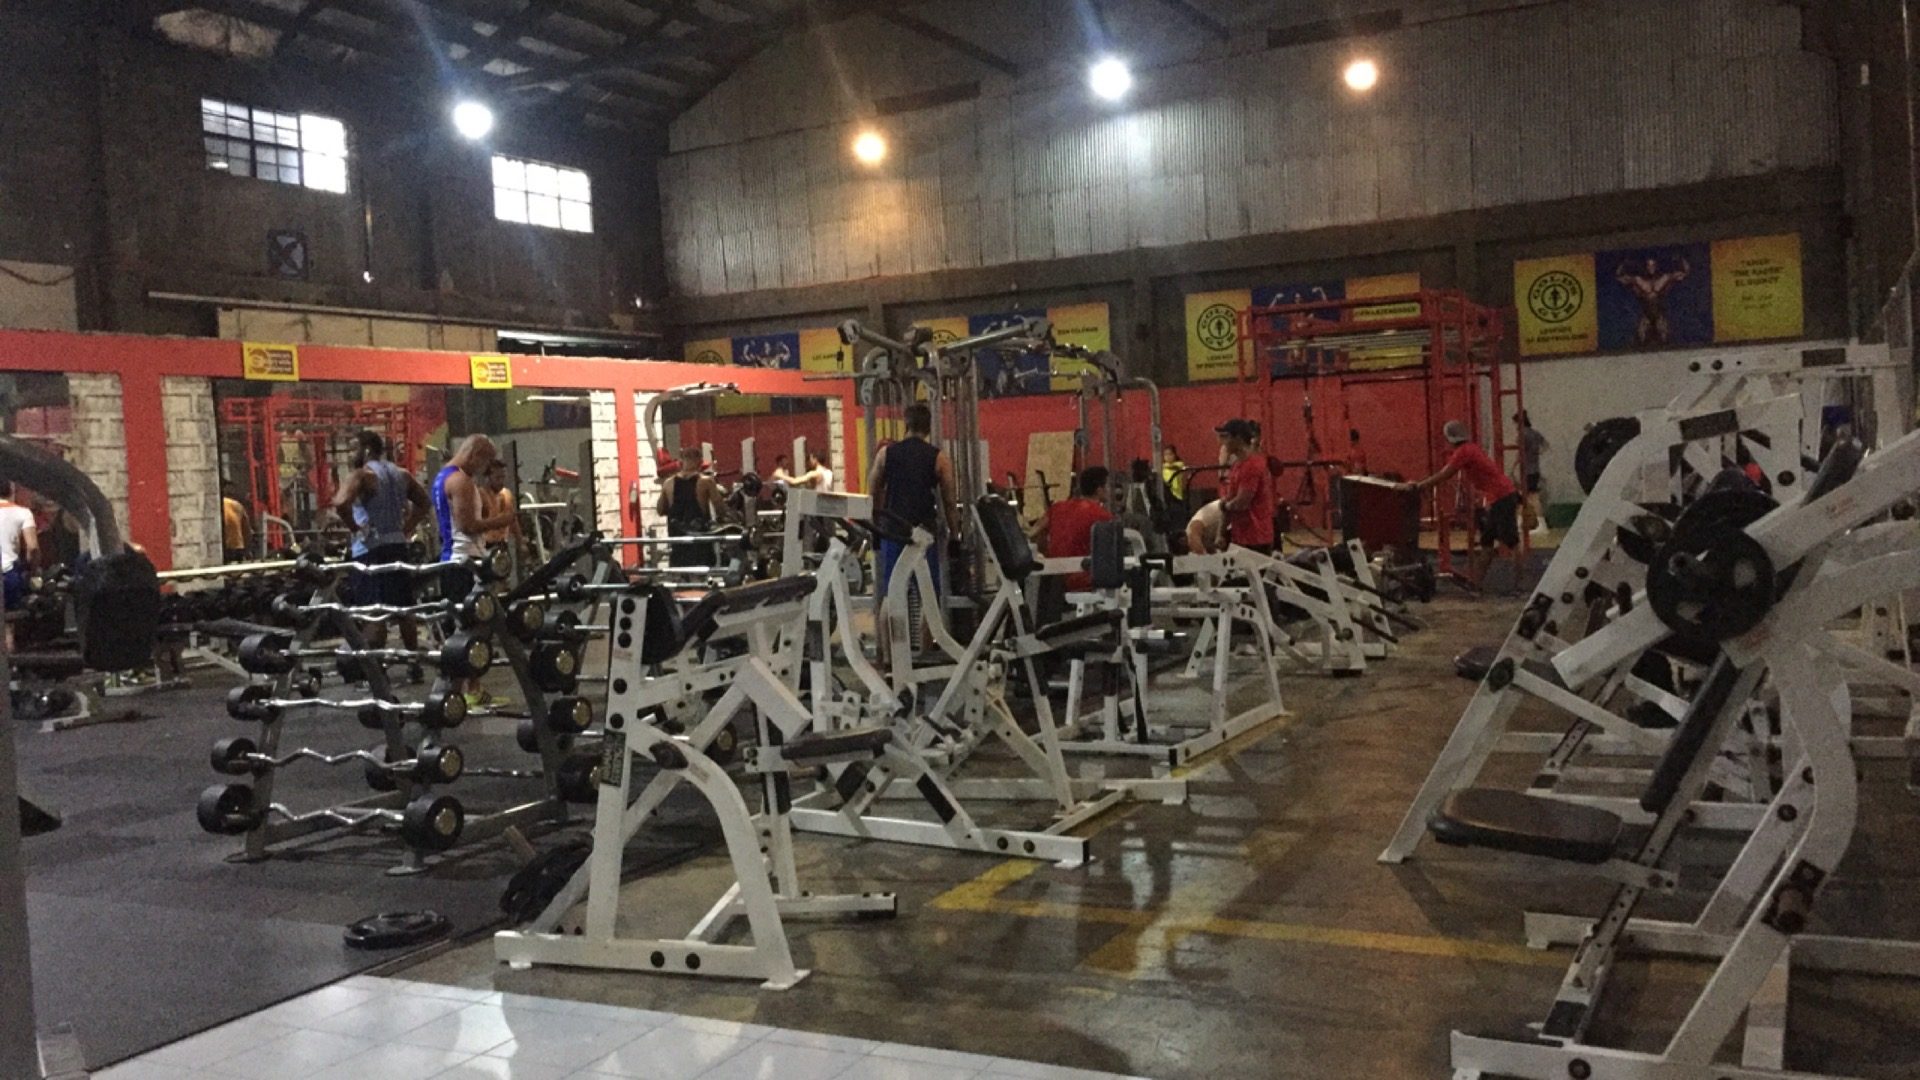 Gym full of people in Manila, Philippines. LA Union & hospitalized in Manila